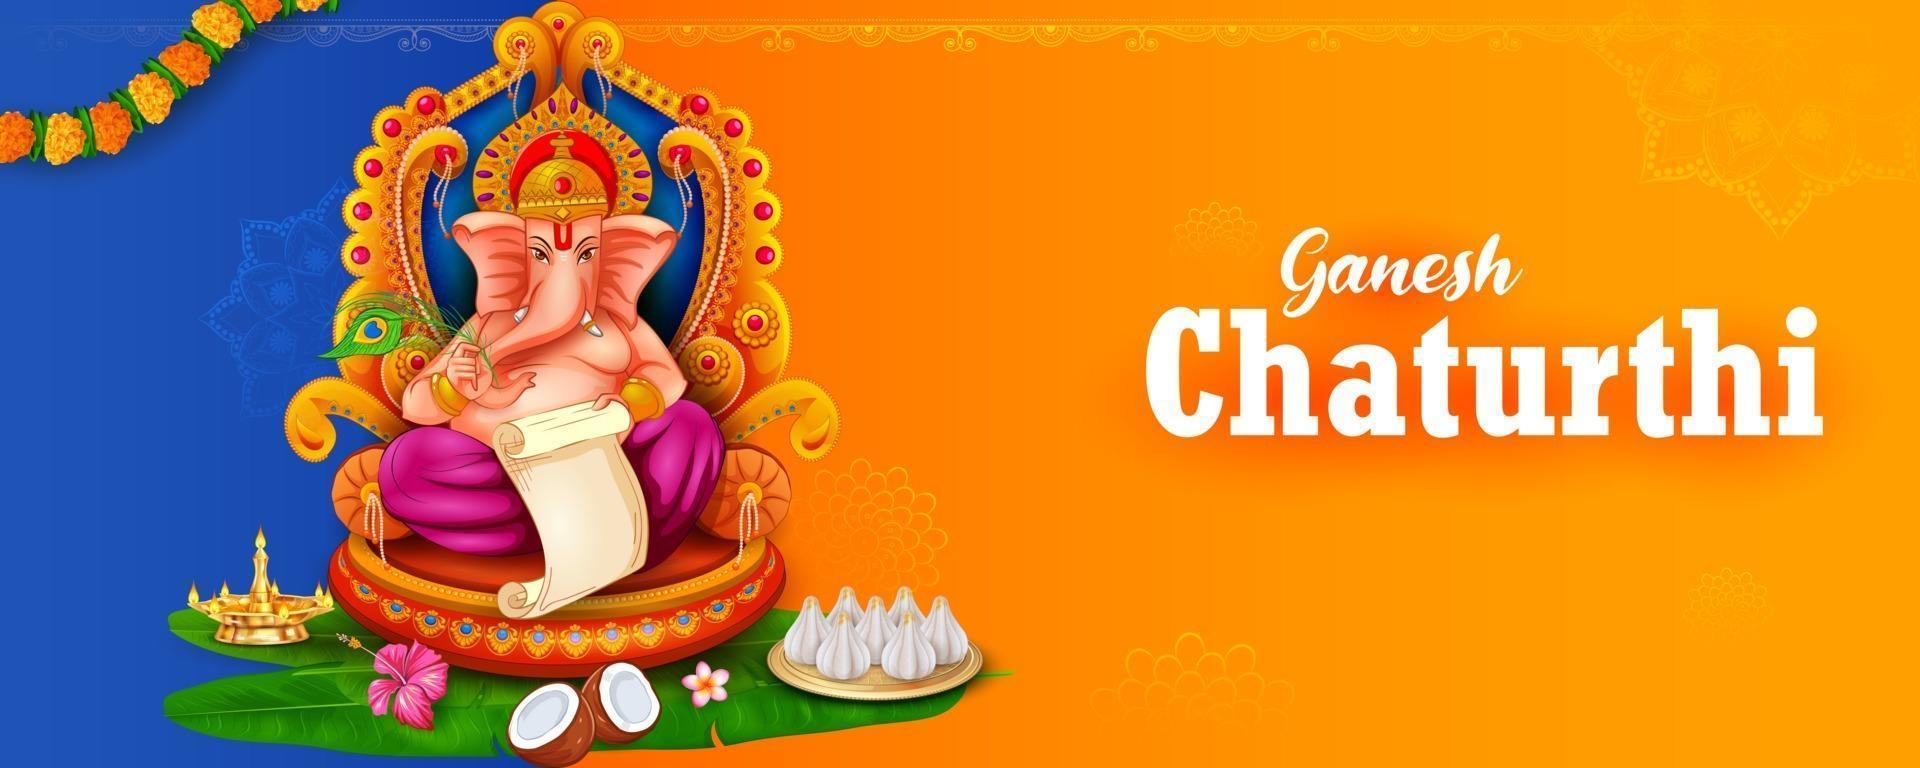 Lord Ganpati-achtergrond voor Ganesh Chaturthi-festival van India vector